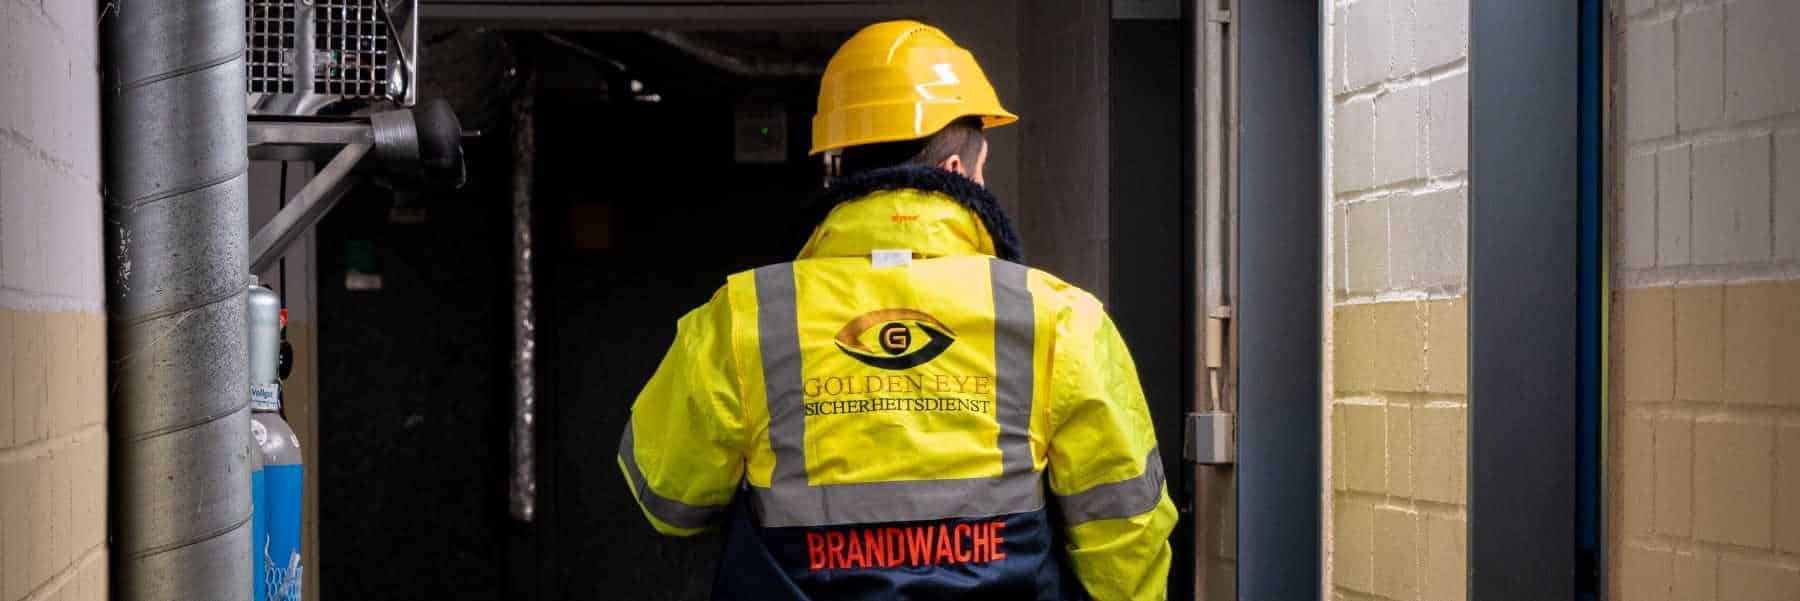 Brandschutzhelfer Ausbildung Frankfurt